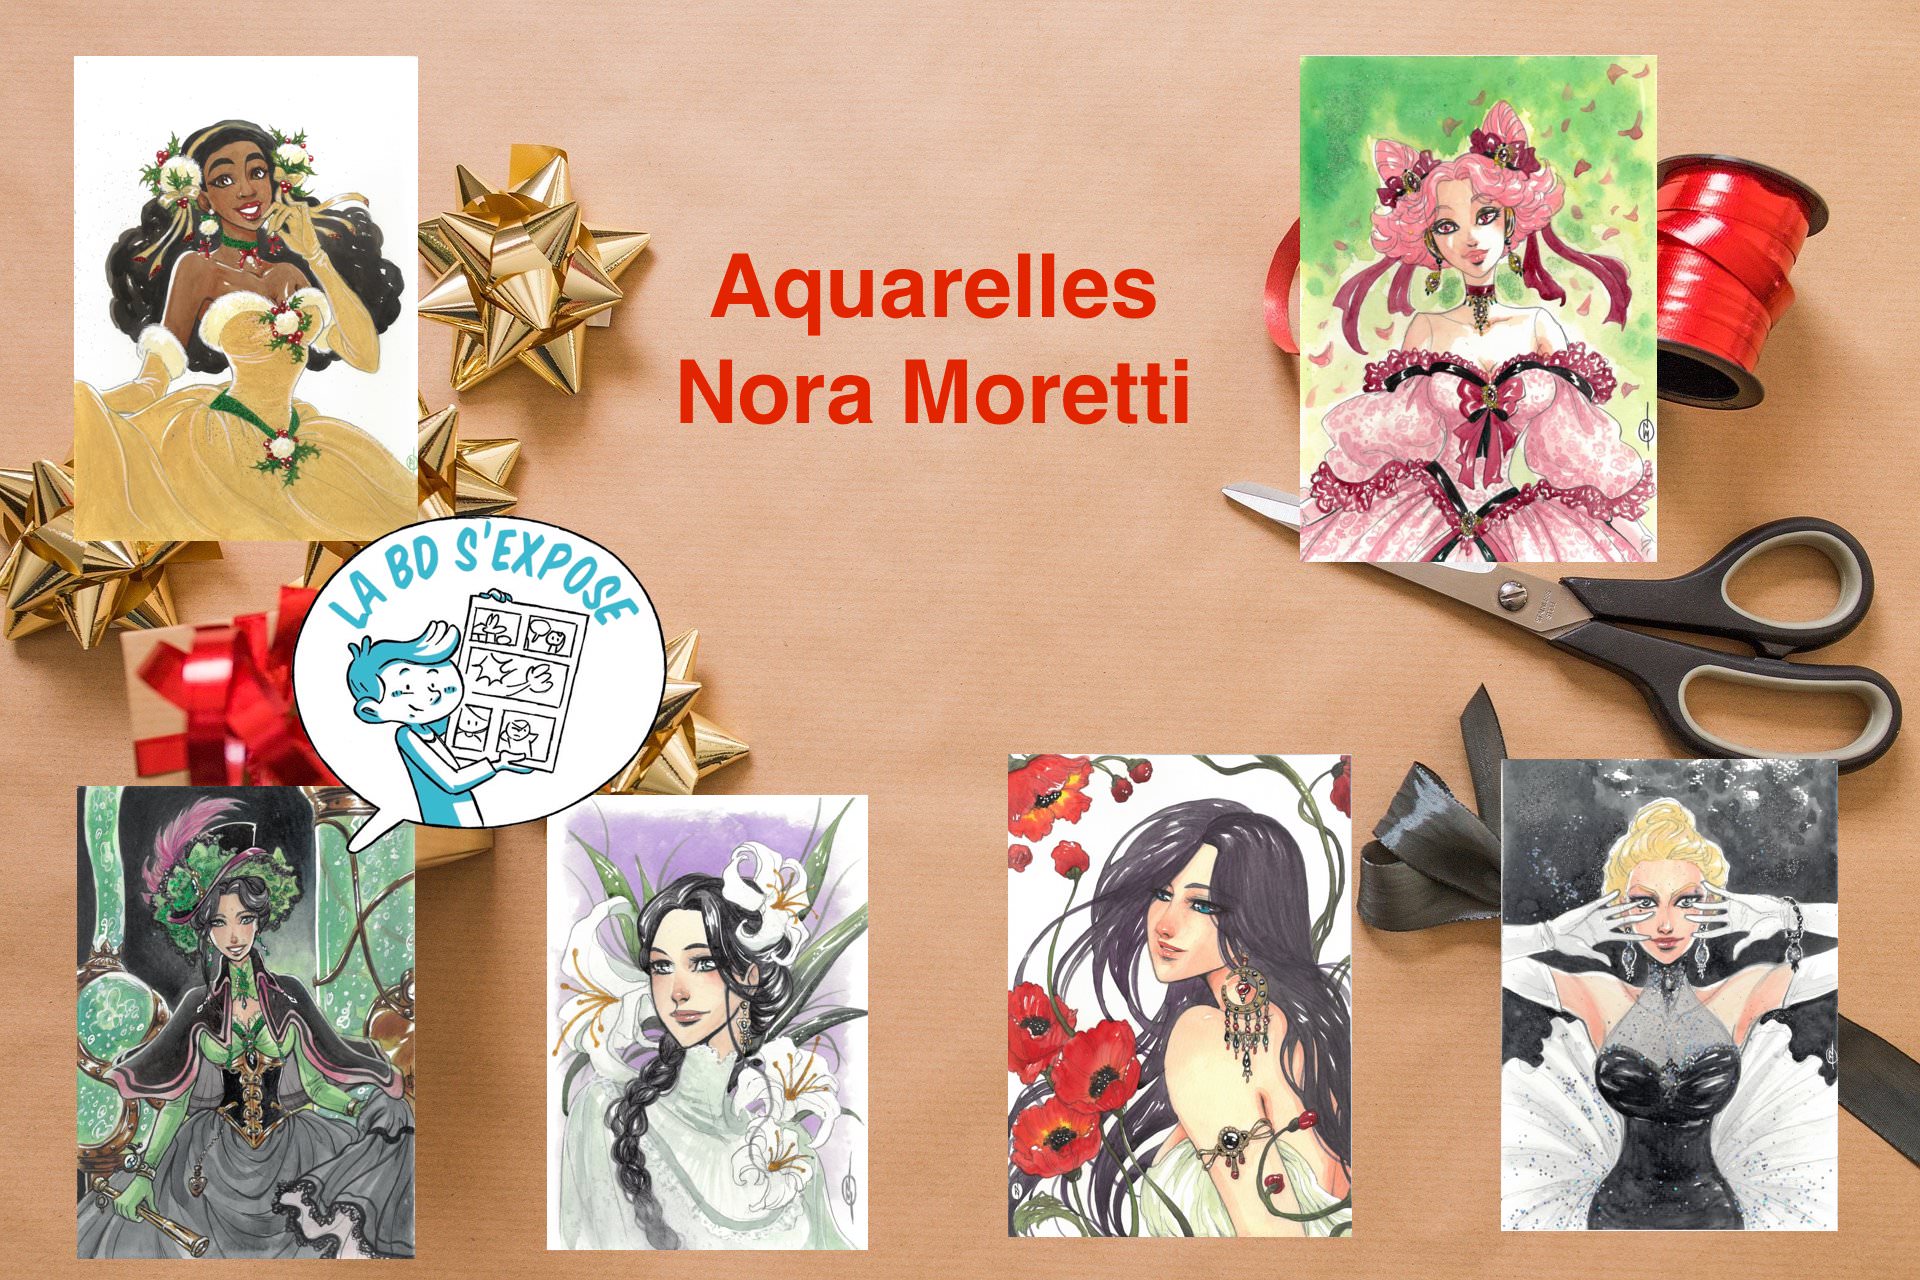 Aquarelles Nora Moretti reseaux